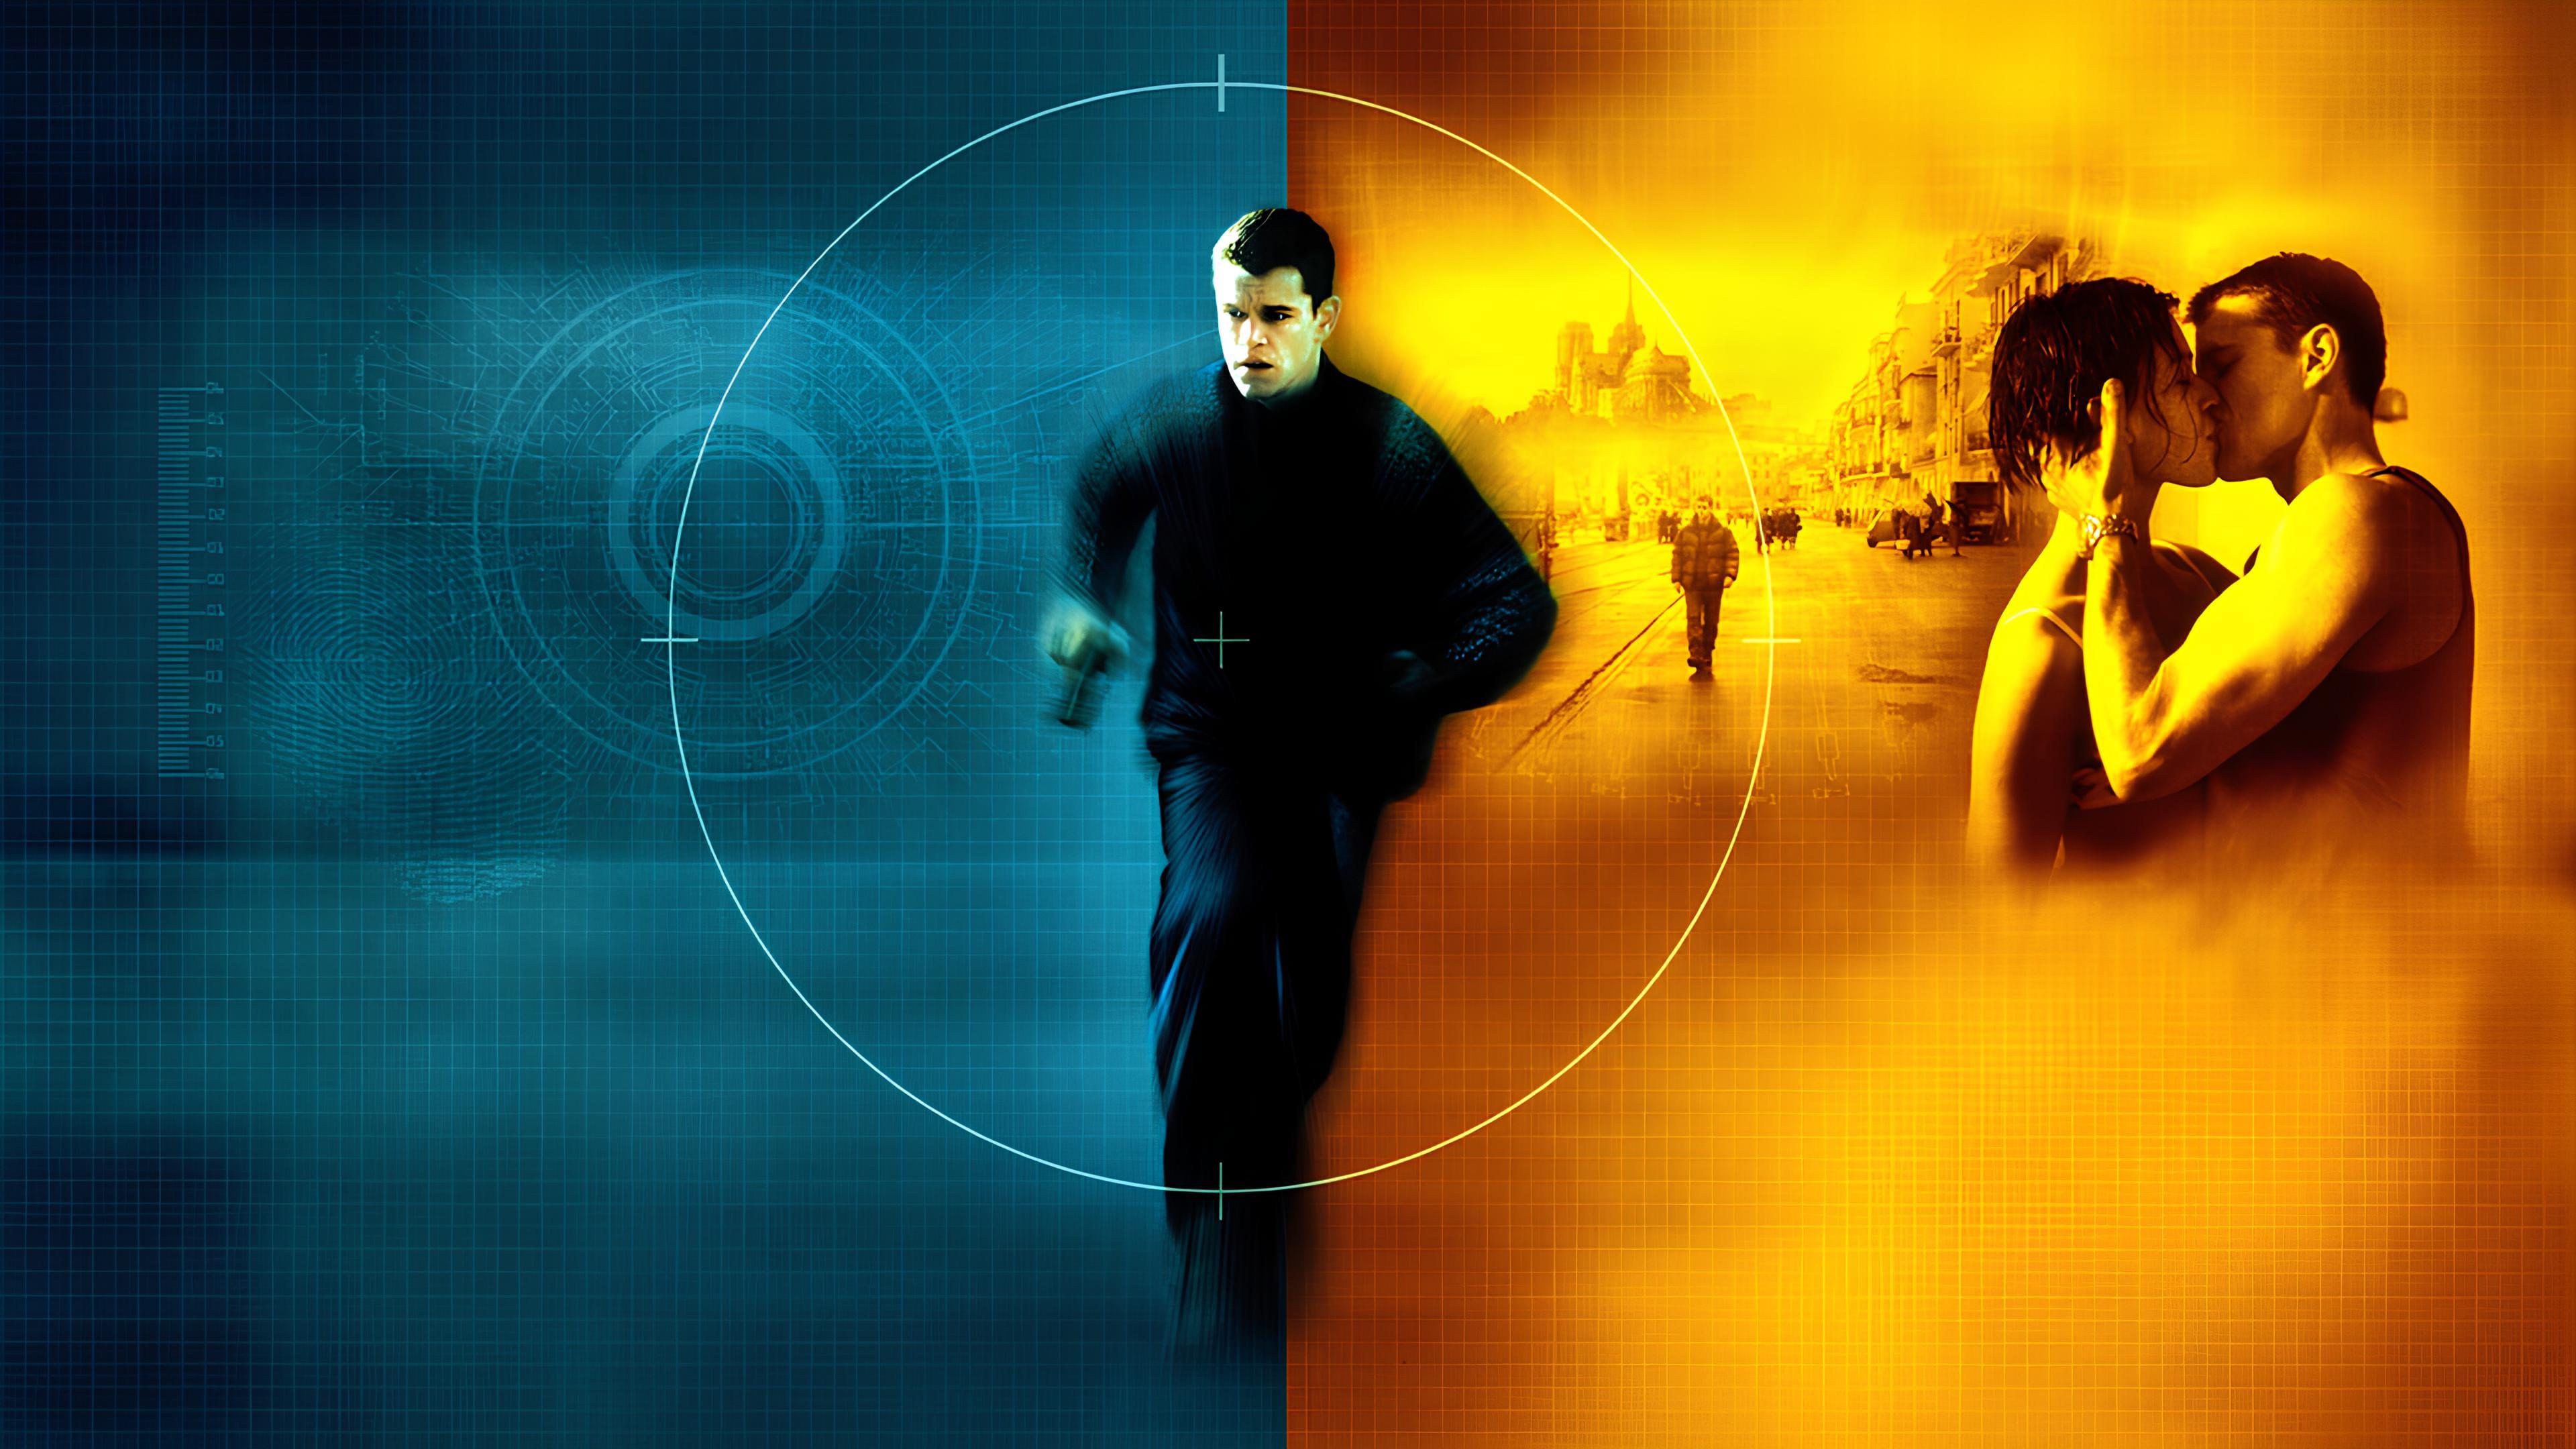 The Bourne Identity backdrop